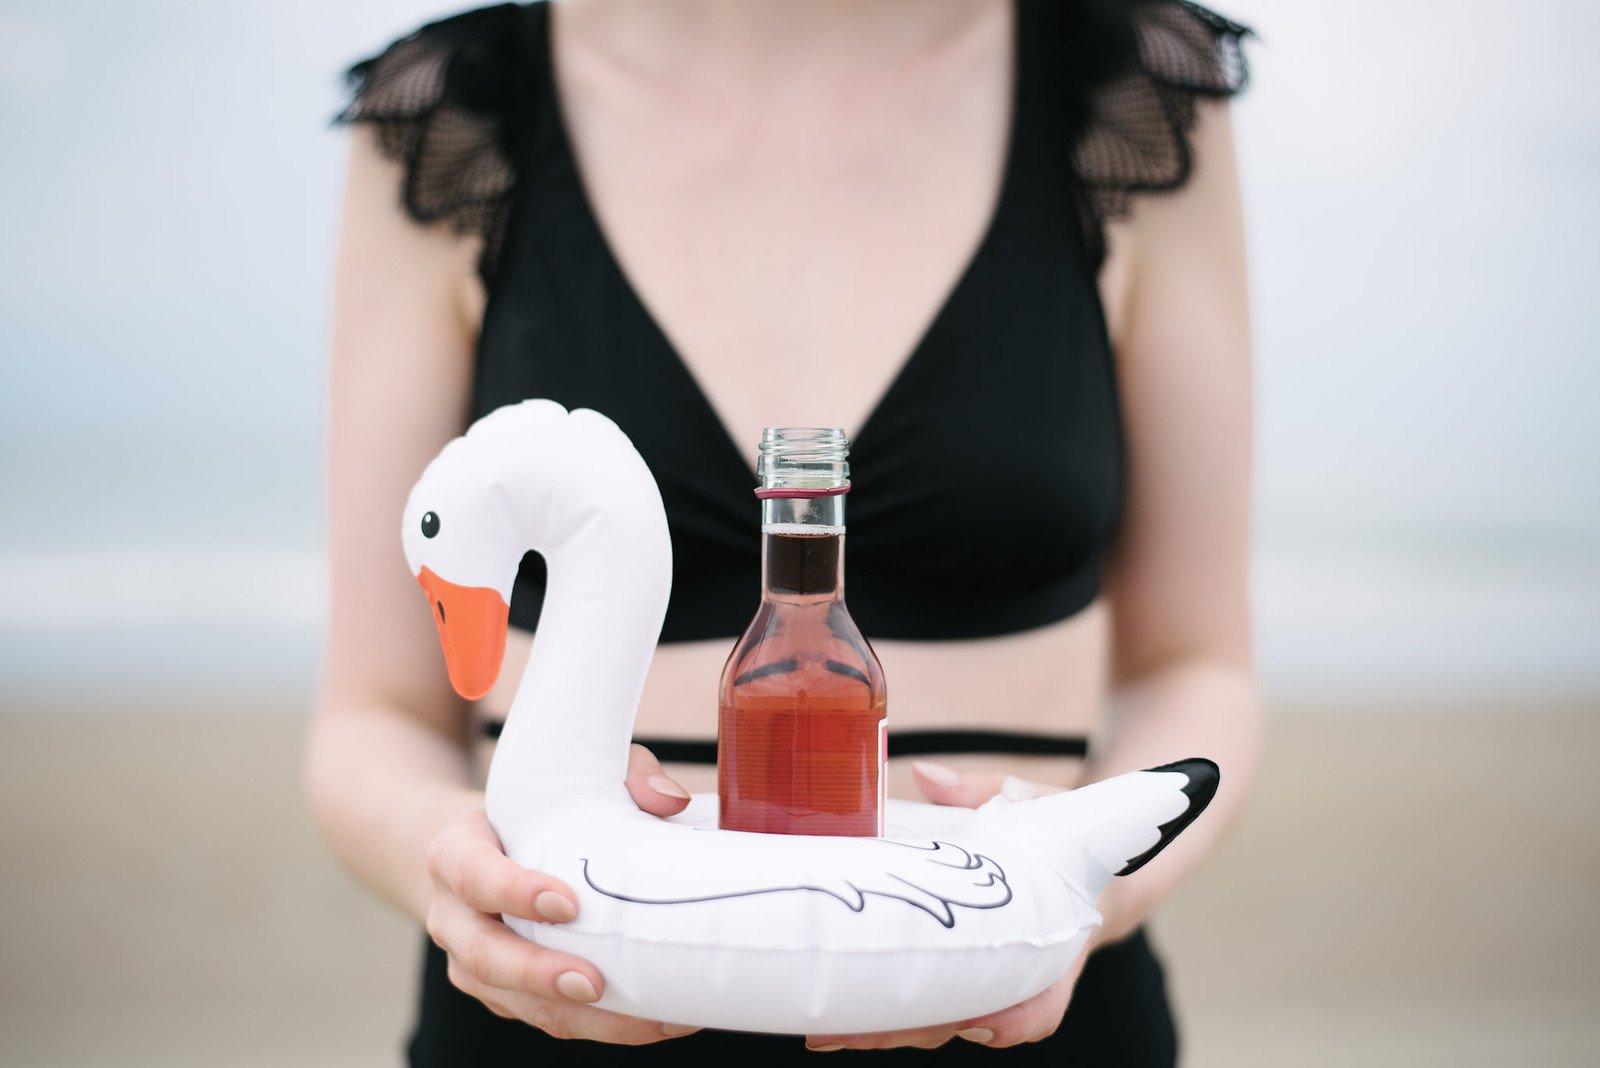 Mini Swan Float with a mini bottle of Rose on juliettelaura.blogspot.com